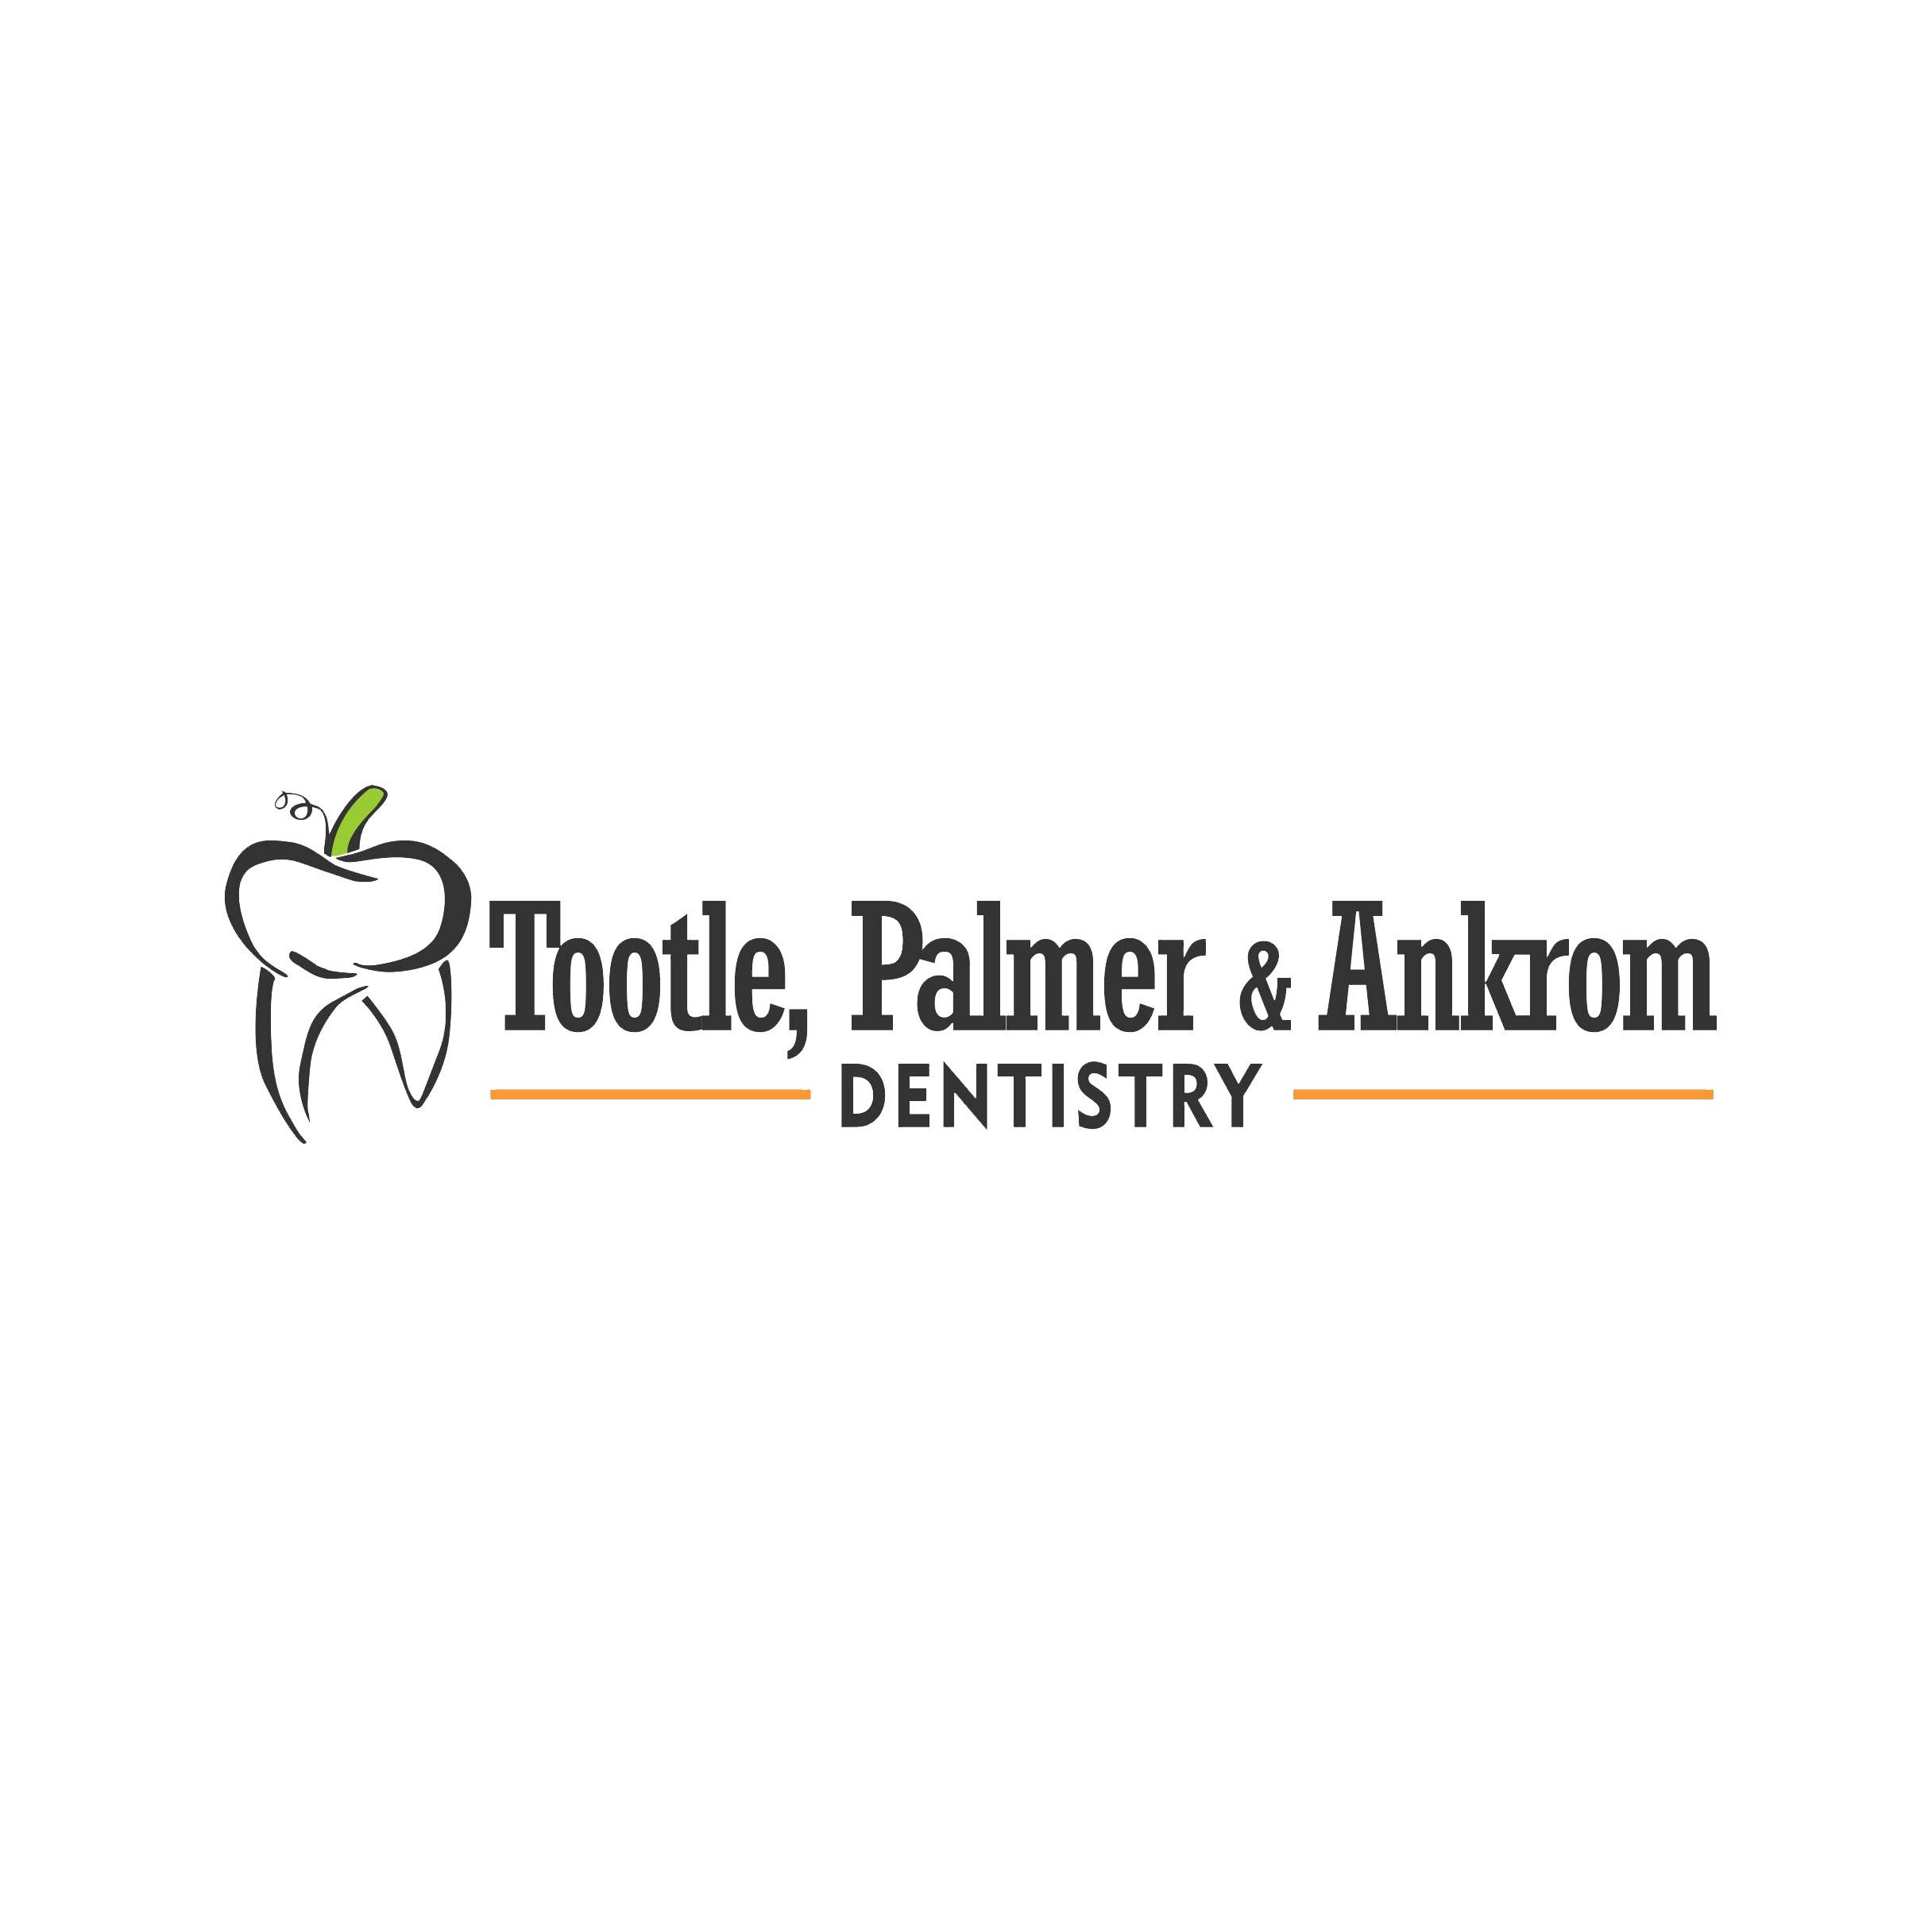 Tootle, Palmer & Ankrom Dentistry Logo